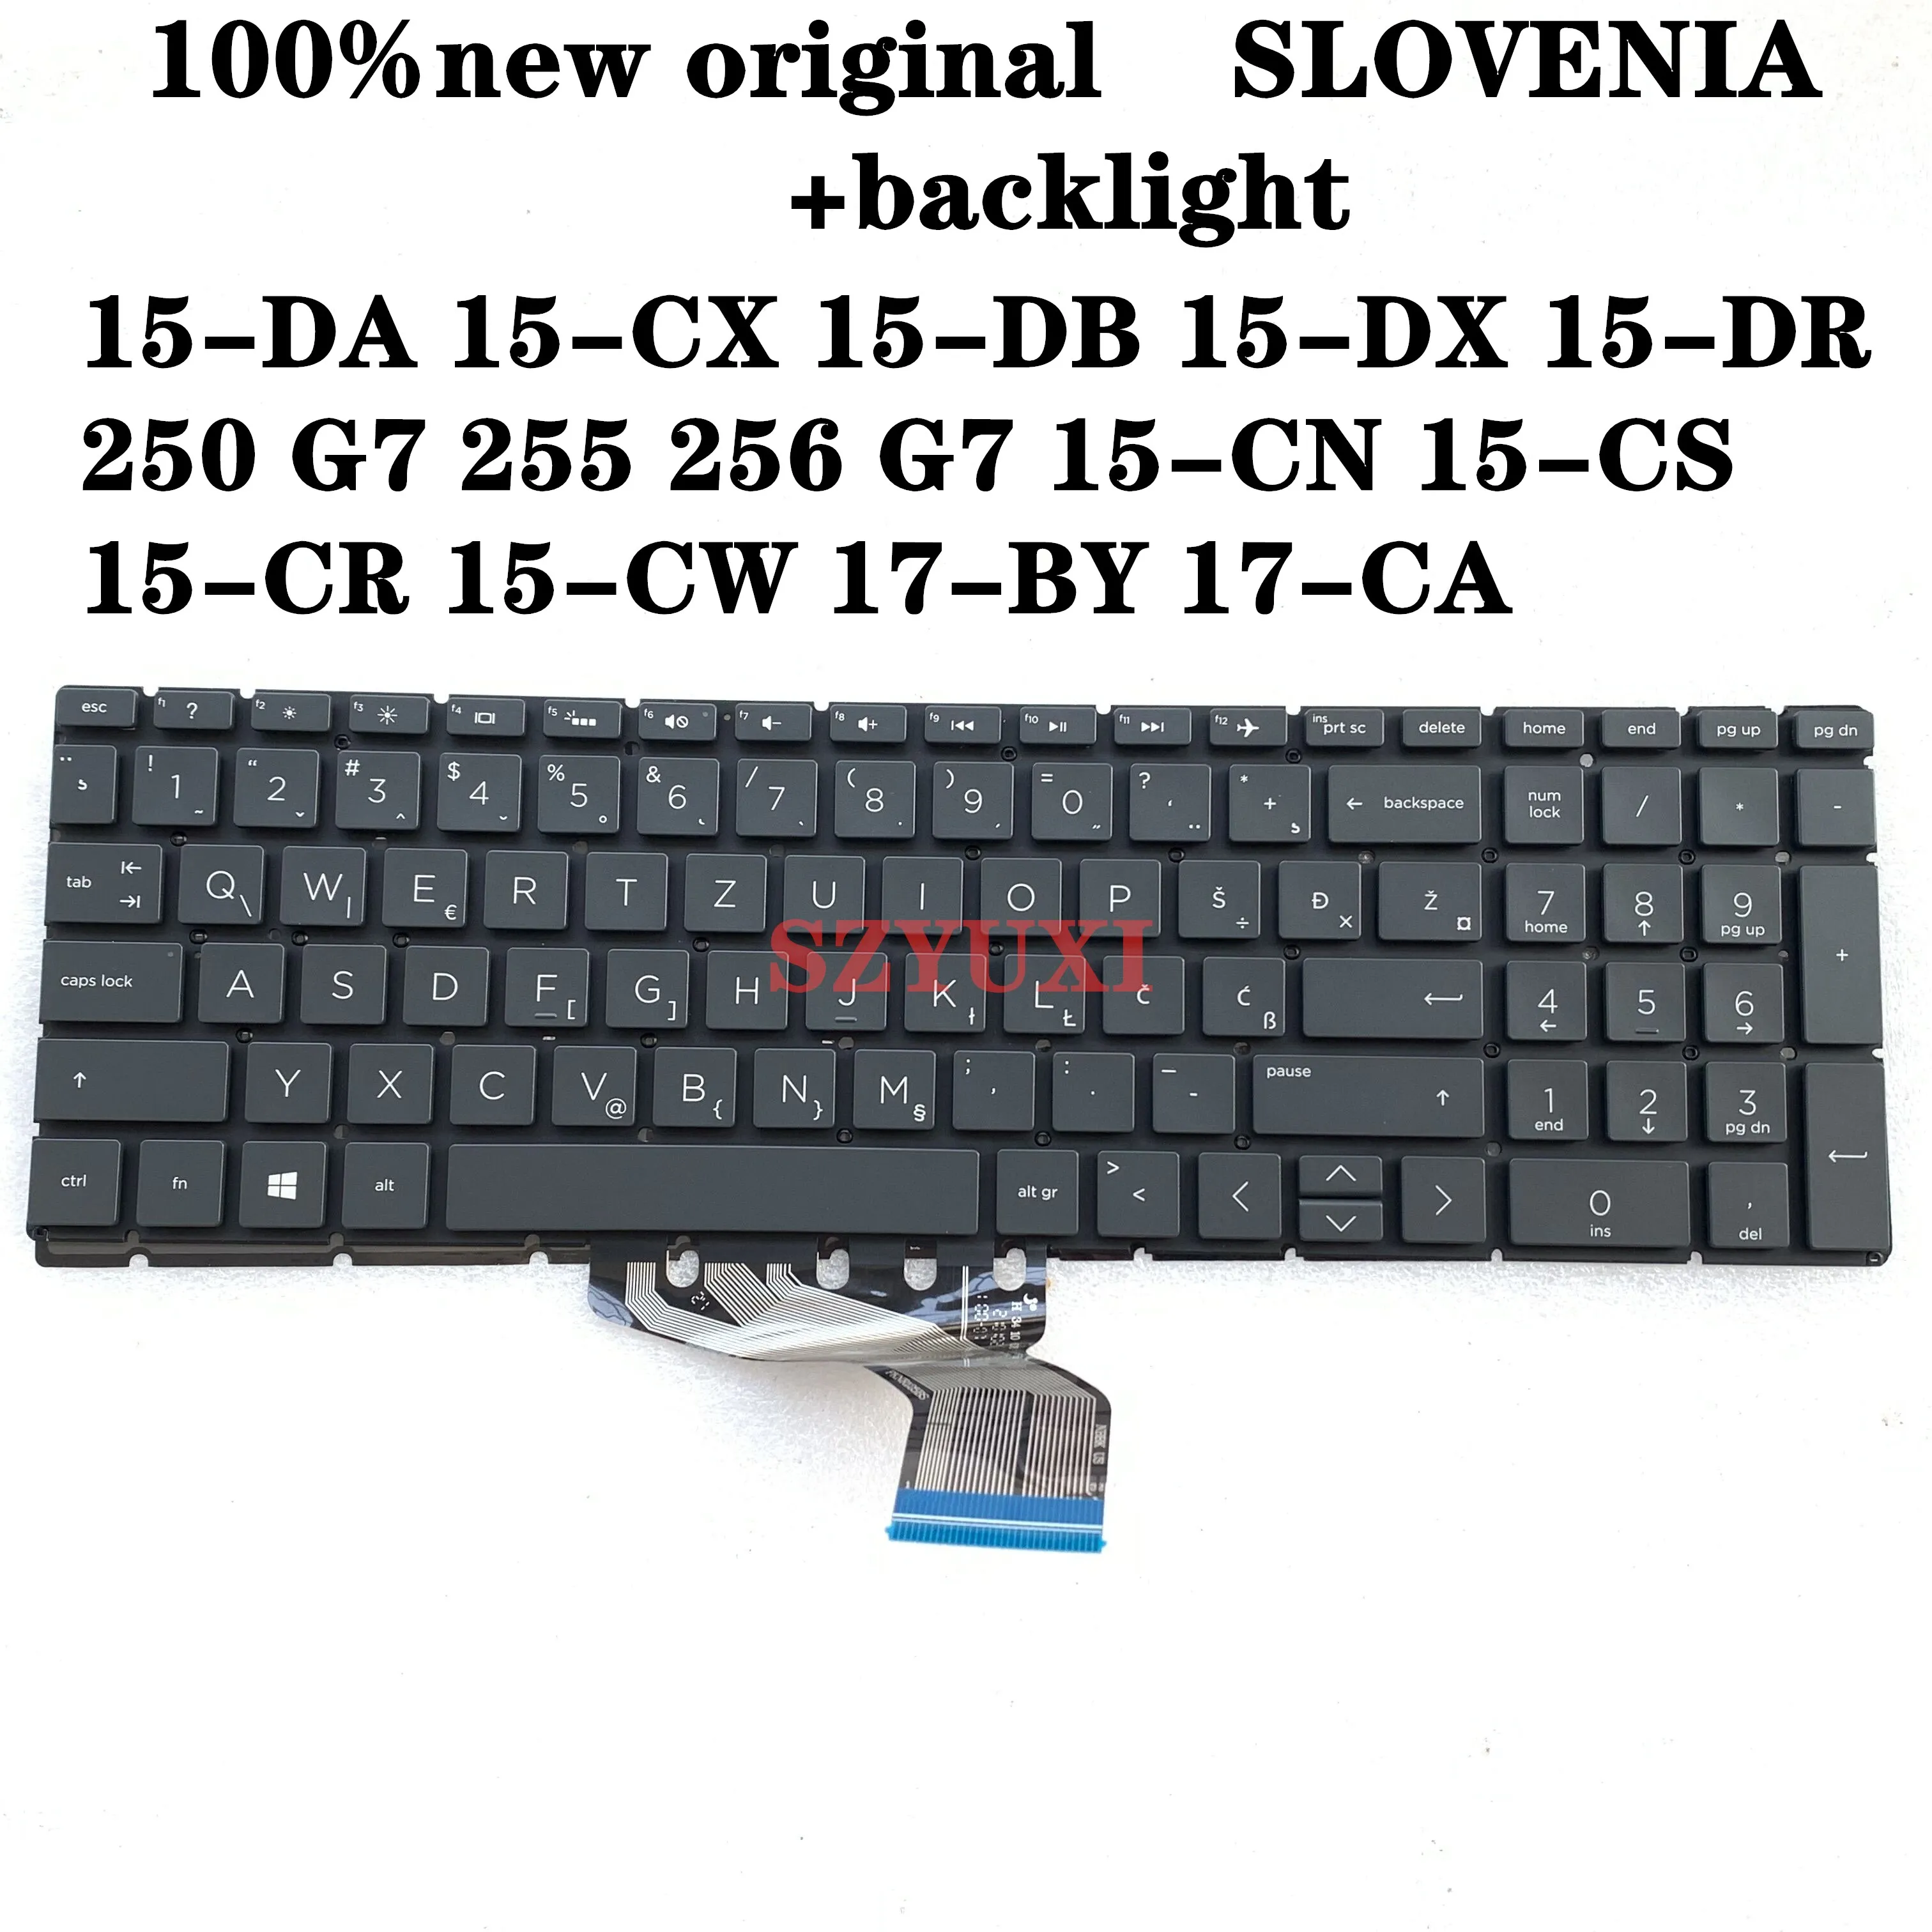 

SLOVENIA Keyboard For HP Pavilion 15-DA 15-CX 15-DB 15-DX 15-DR 250 G7 255 256 G7 15-CN 15-CS 15-CR 15-CW 17-BY 17-CA